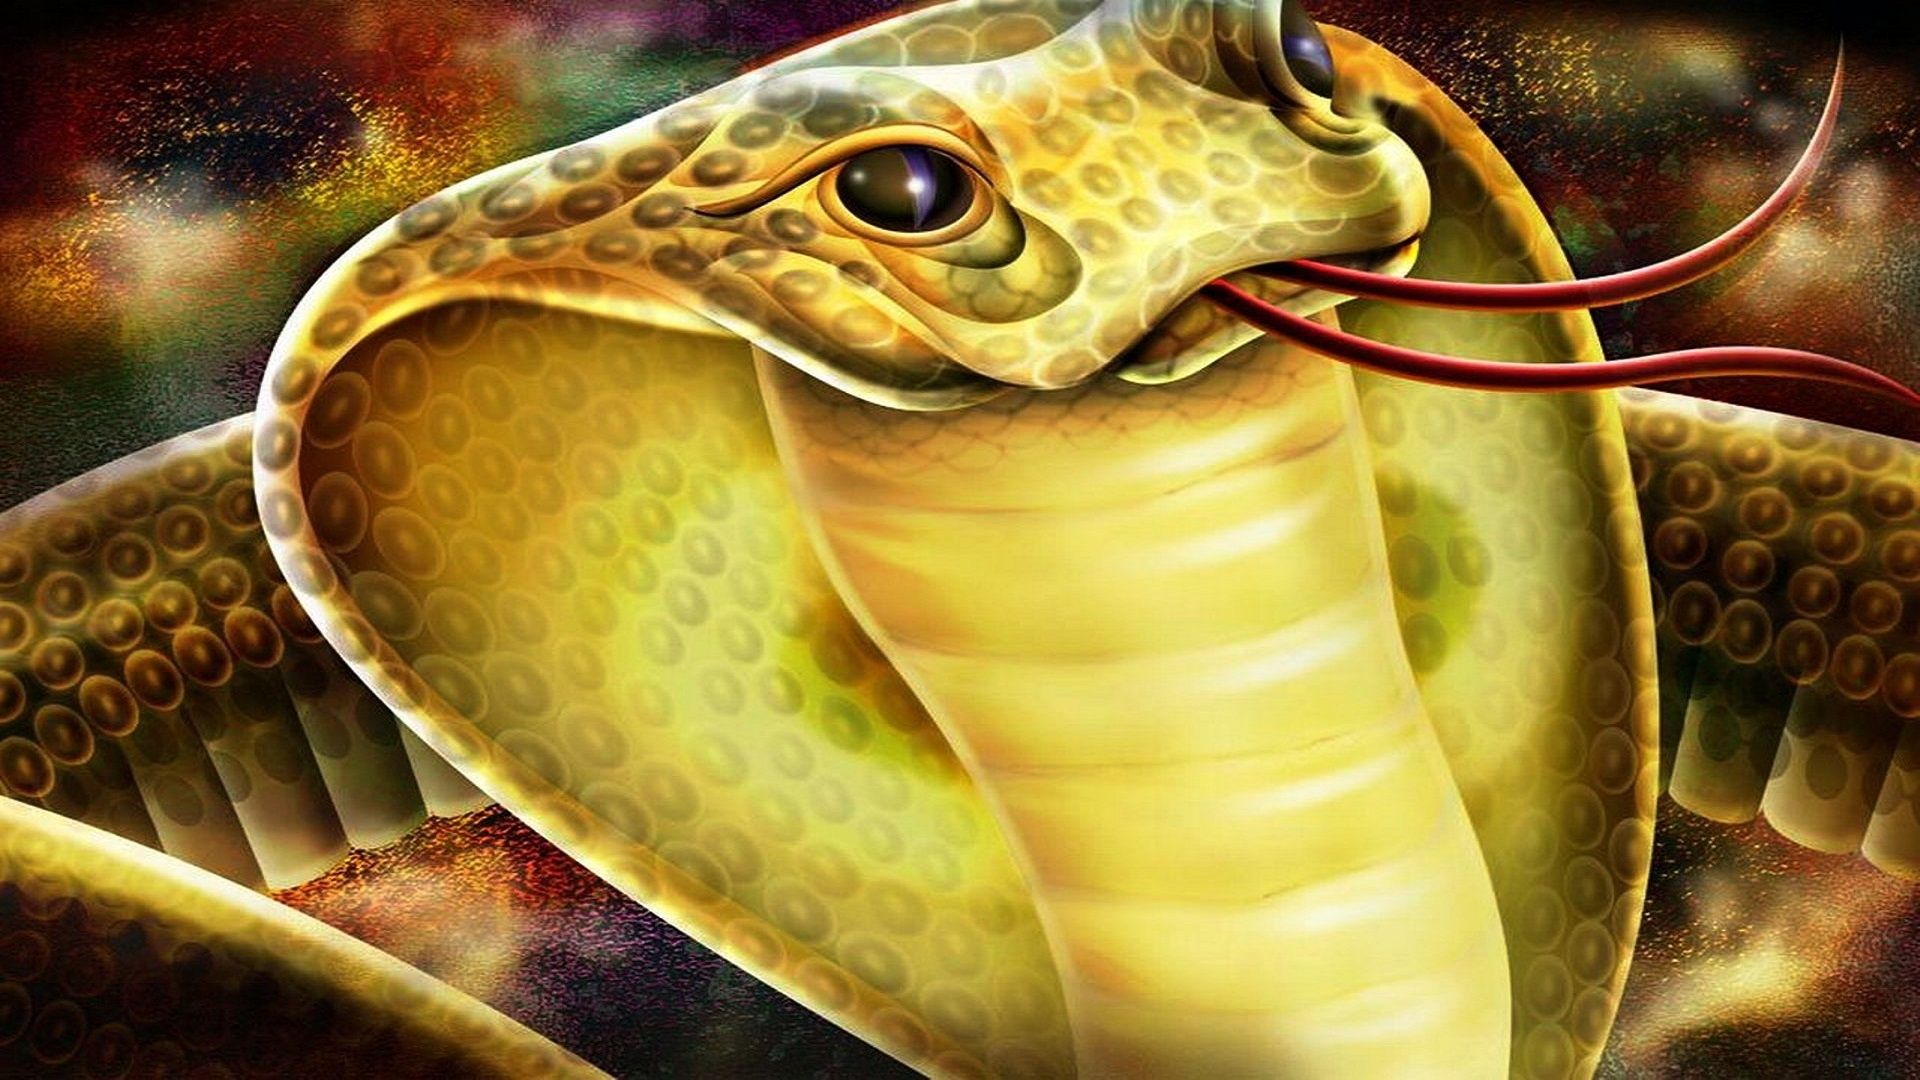 könig cobra hd wallpaper herunterladen,schlange,reptil,schlange,elapidae